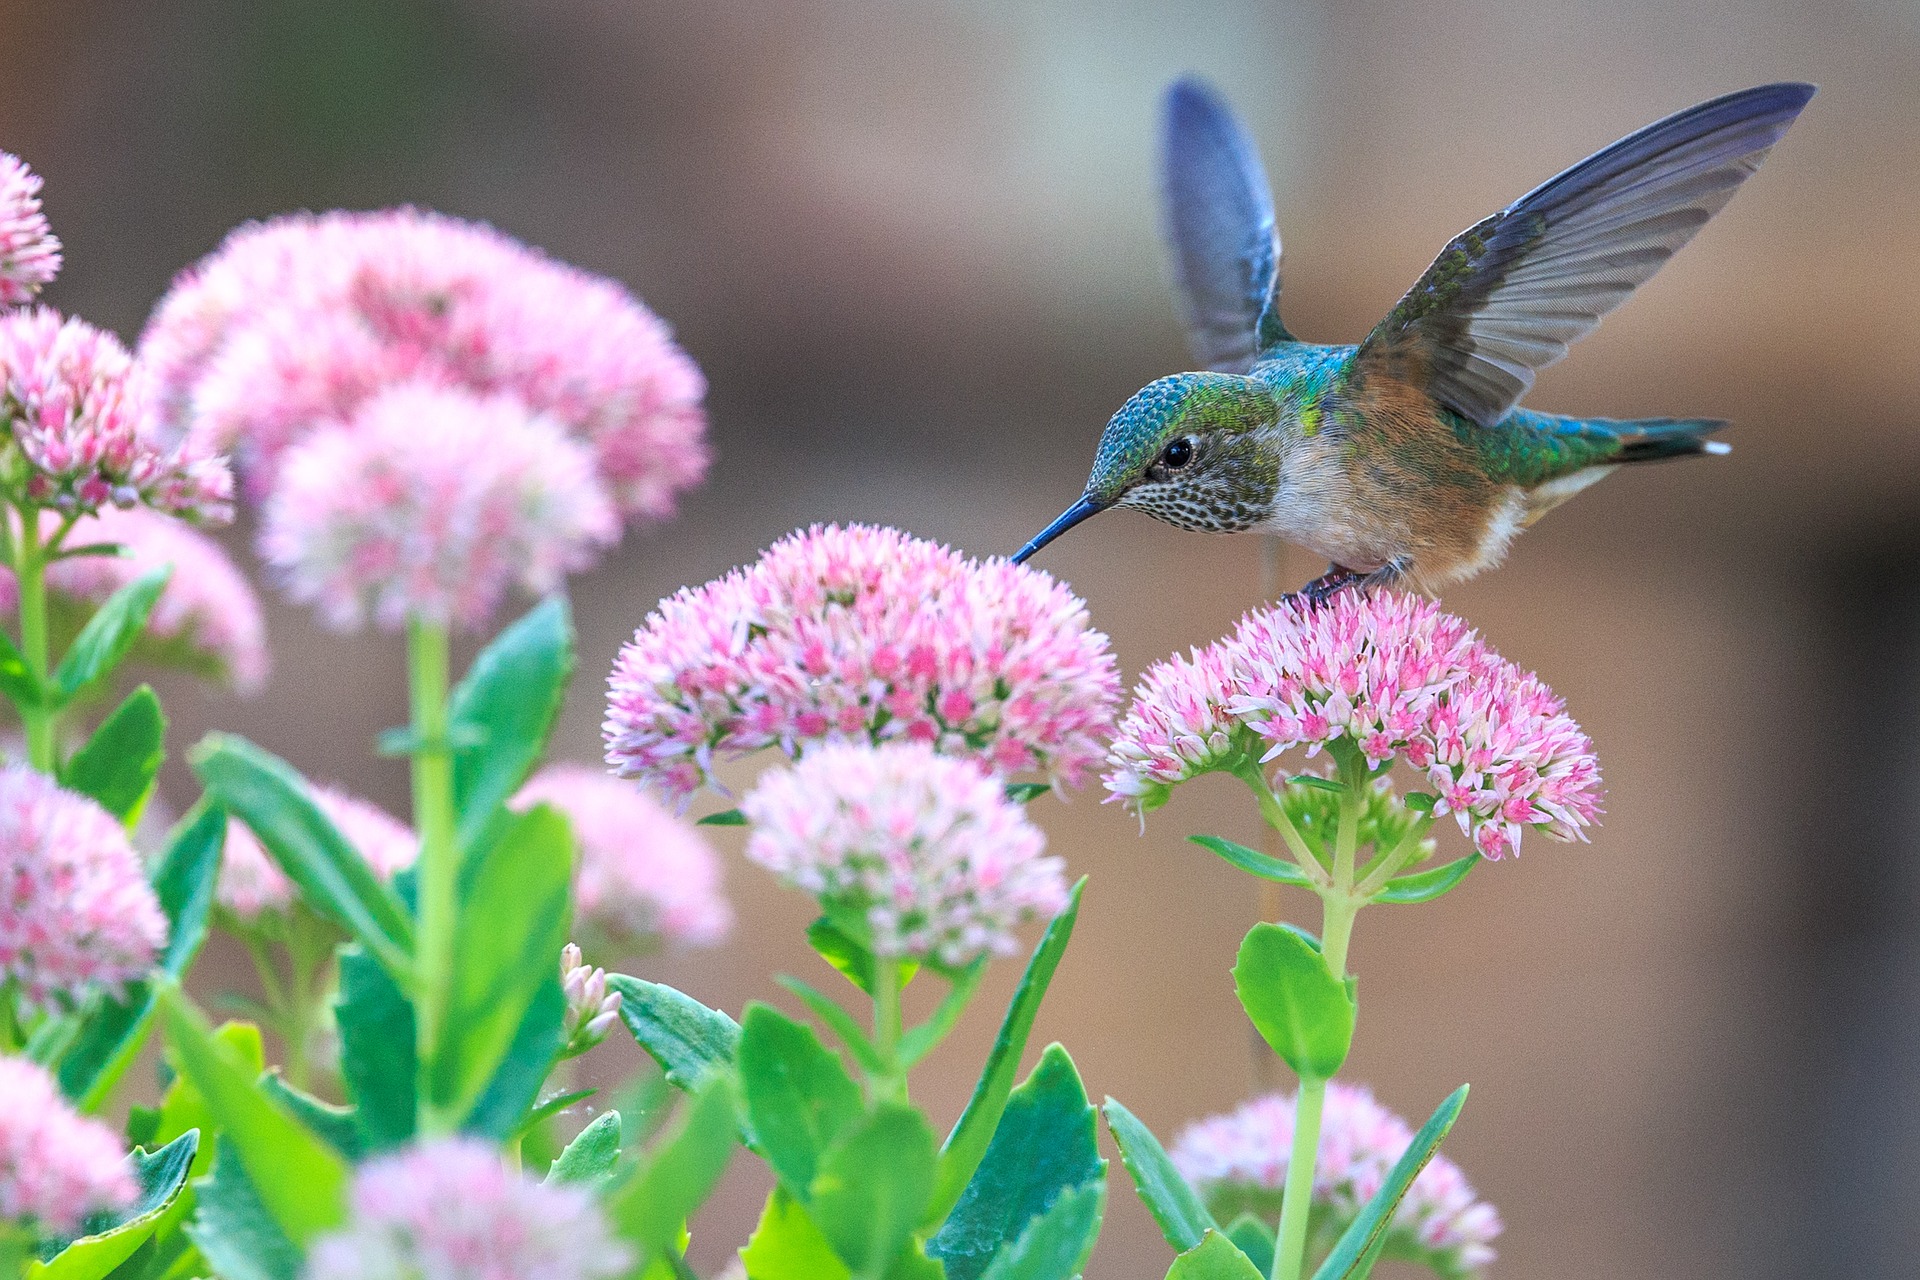 A curious hummingbird checks out pink flowers.